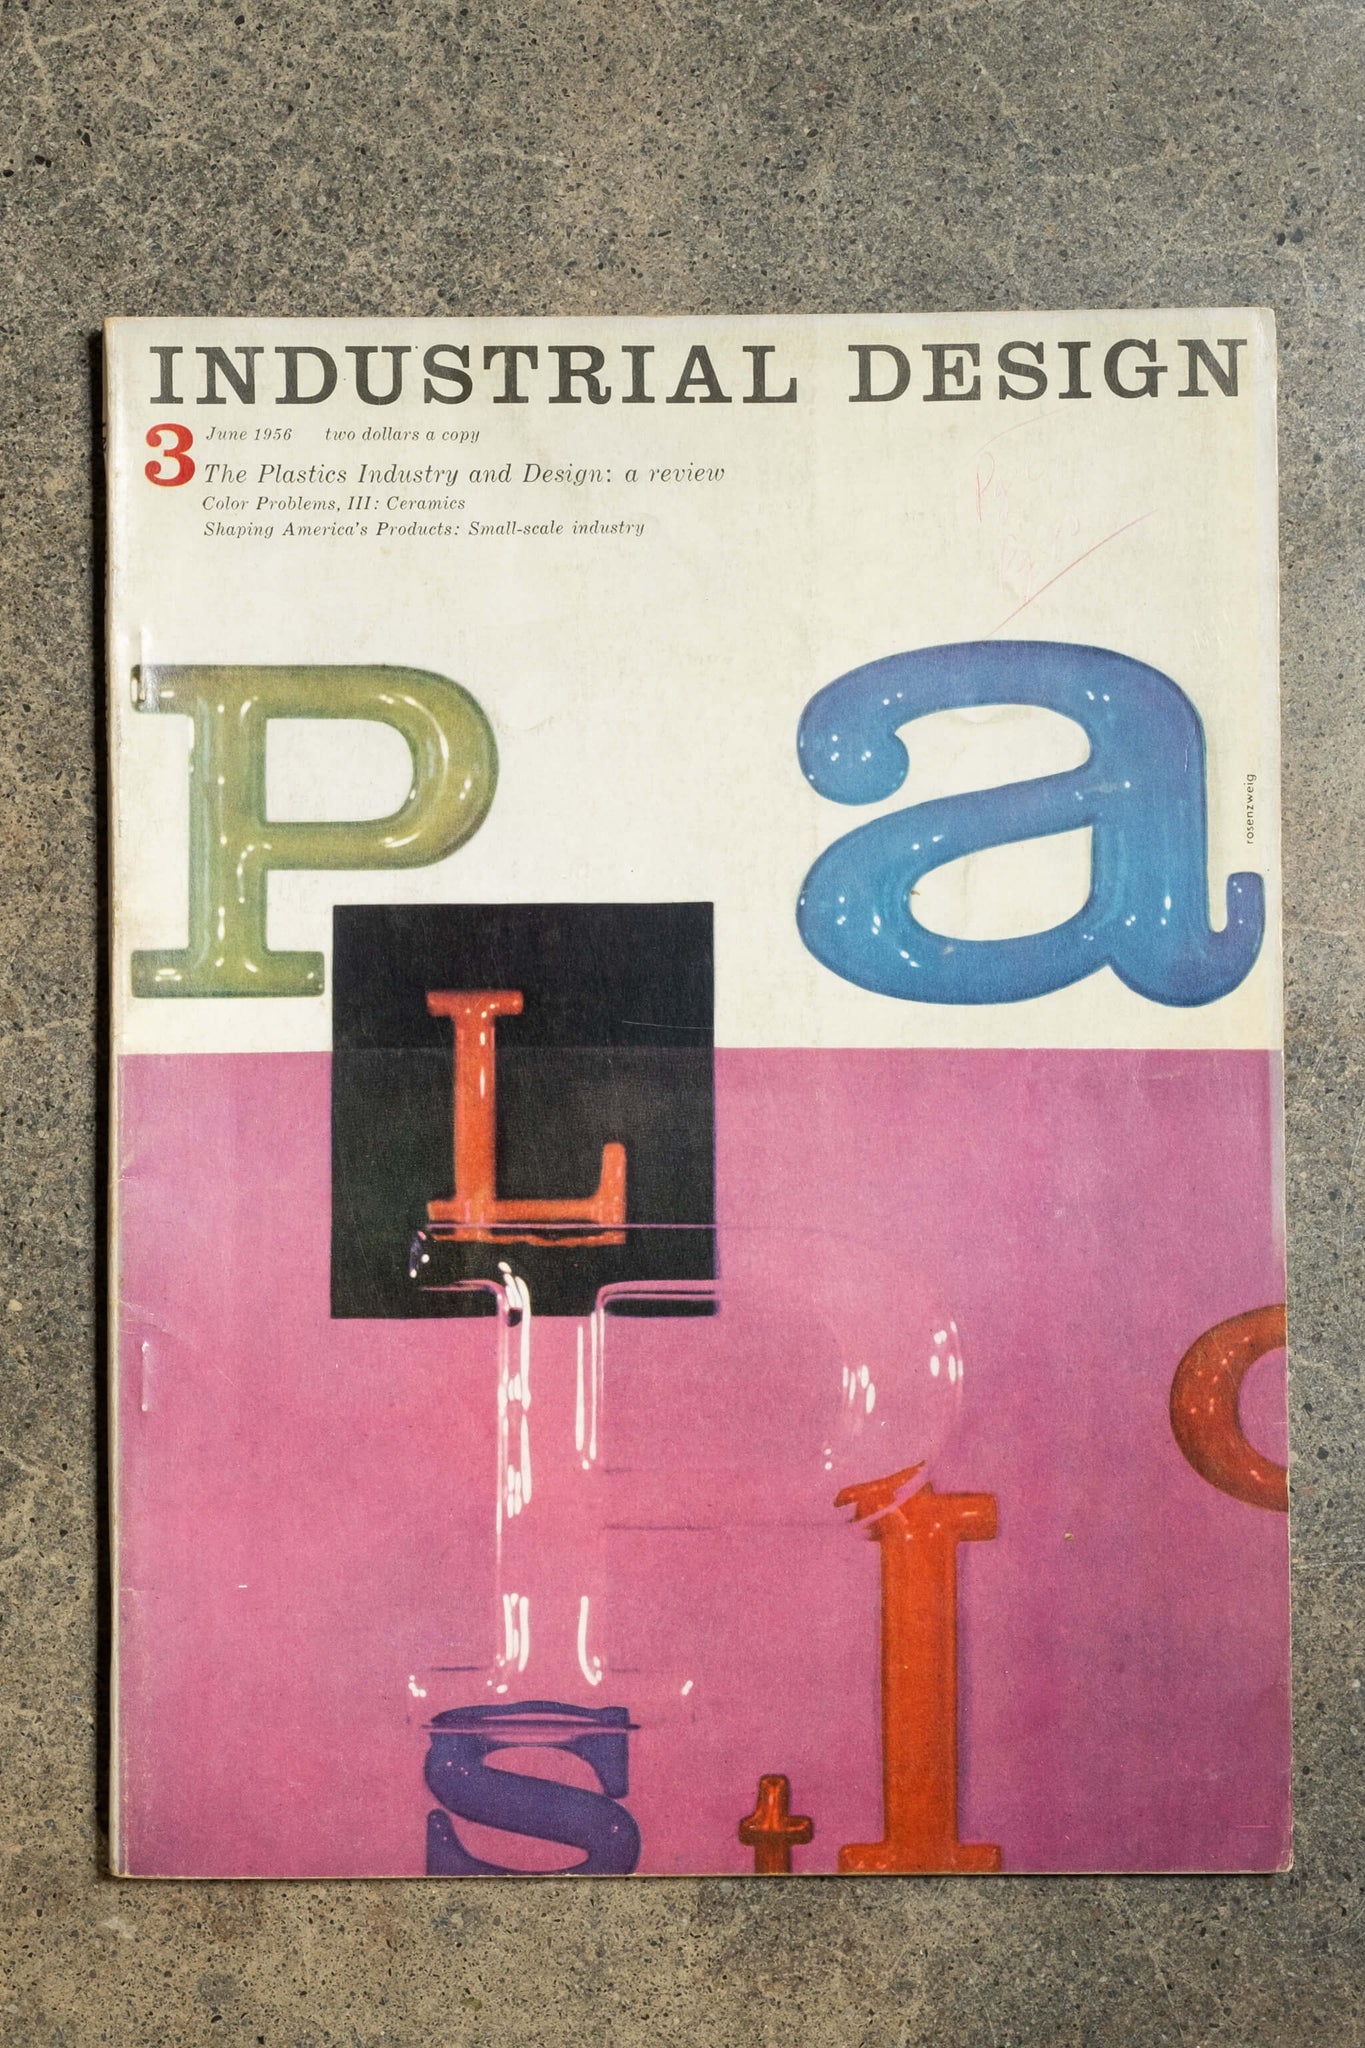 Industrial Design Vintage Magazine, June 1956